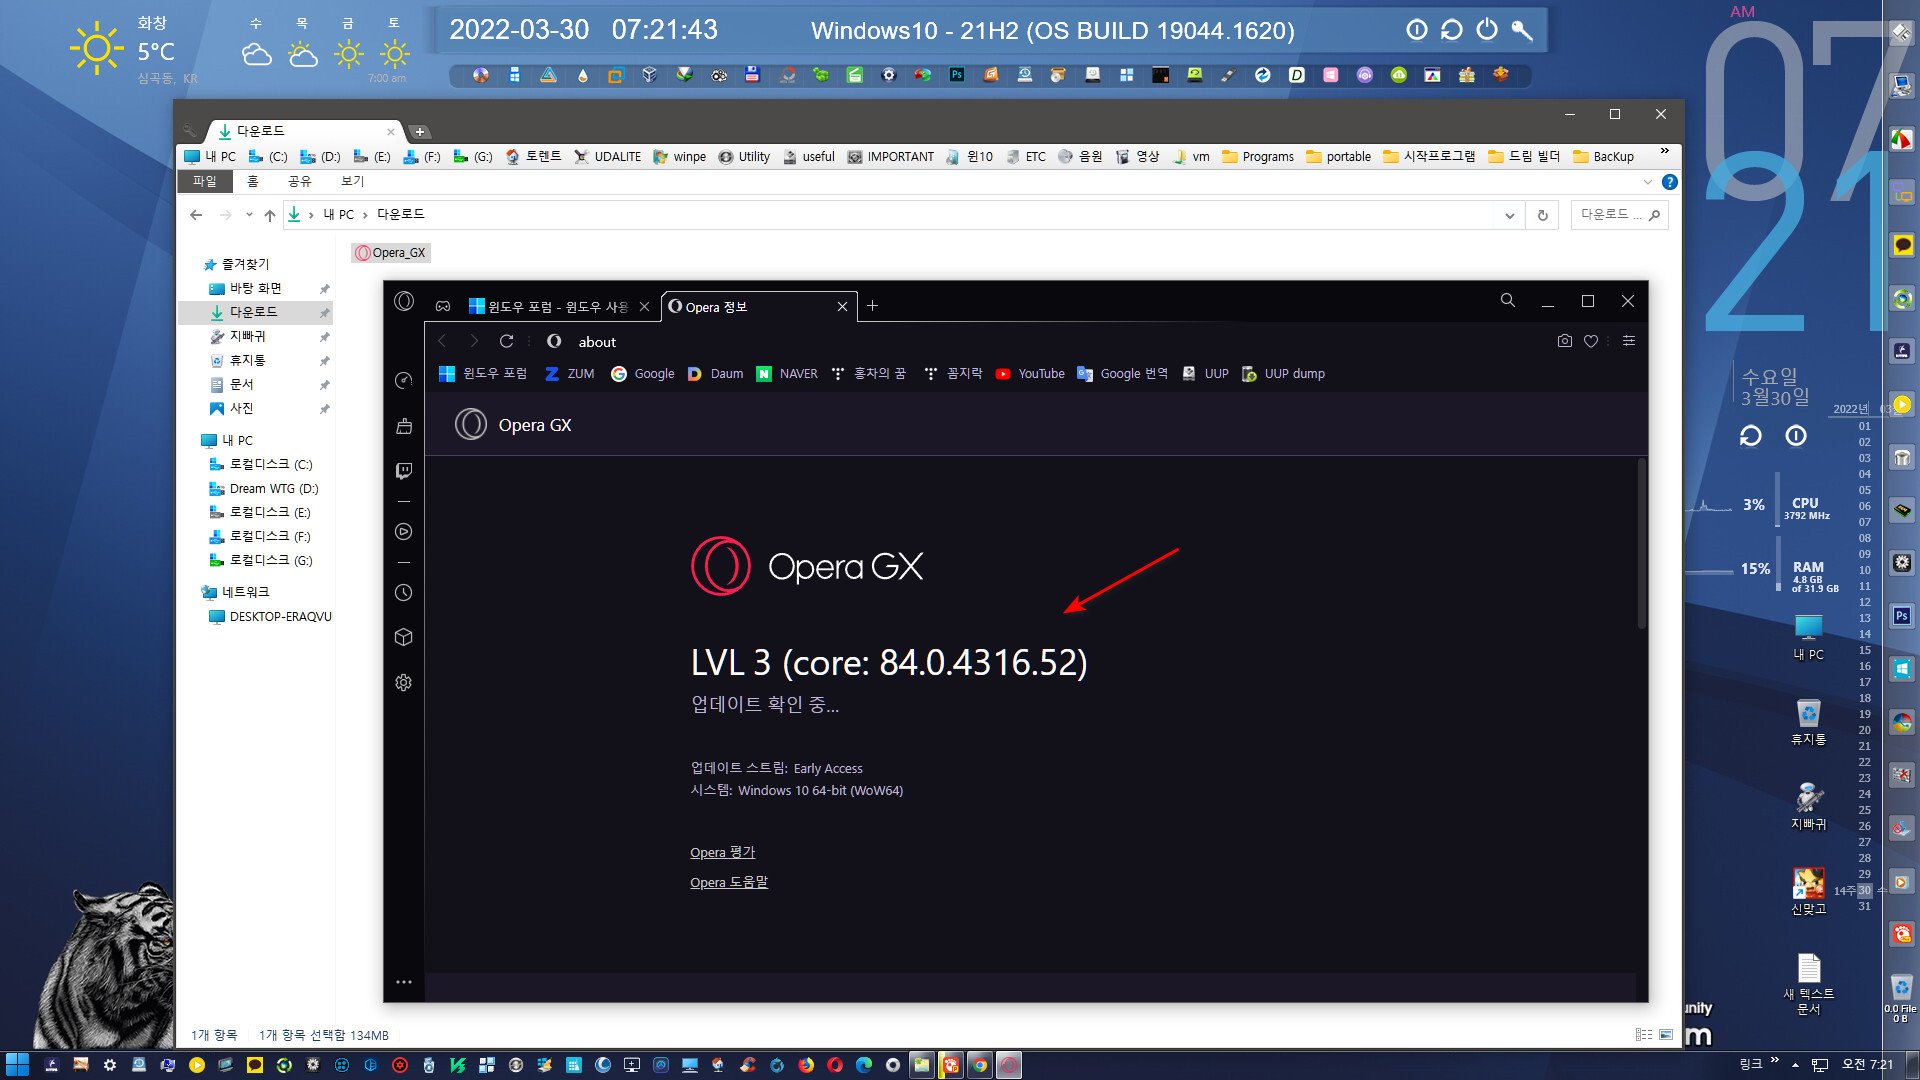 Opera GX 102.0.4880.82 instal the new for windows